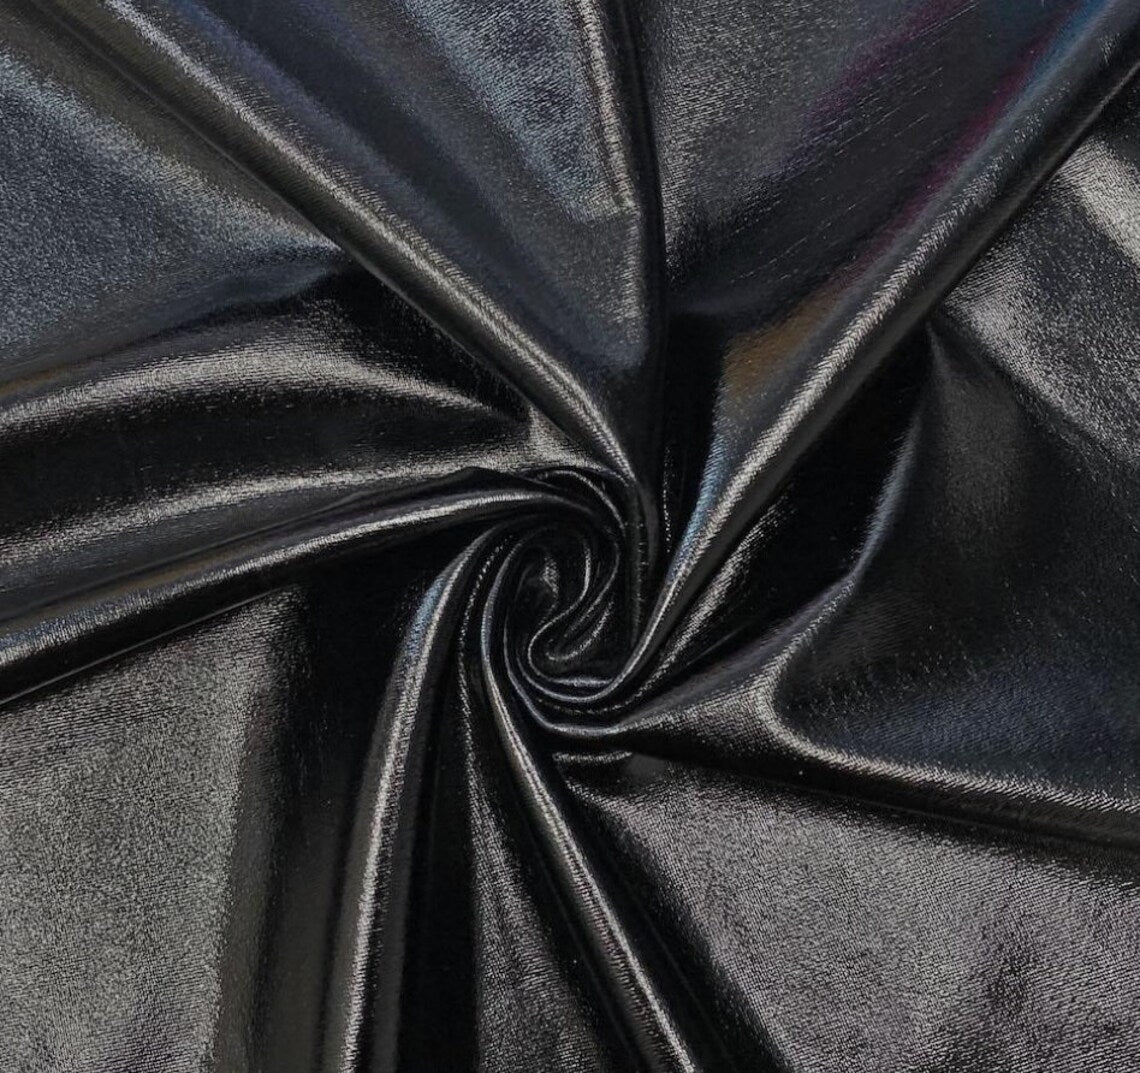 Metallic Foil Spandex Fabric - Spandex Lame Shiny Fabric 2 Way